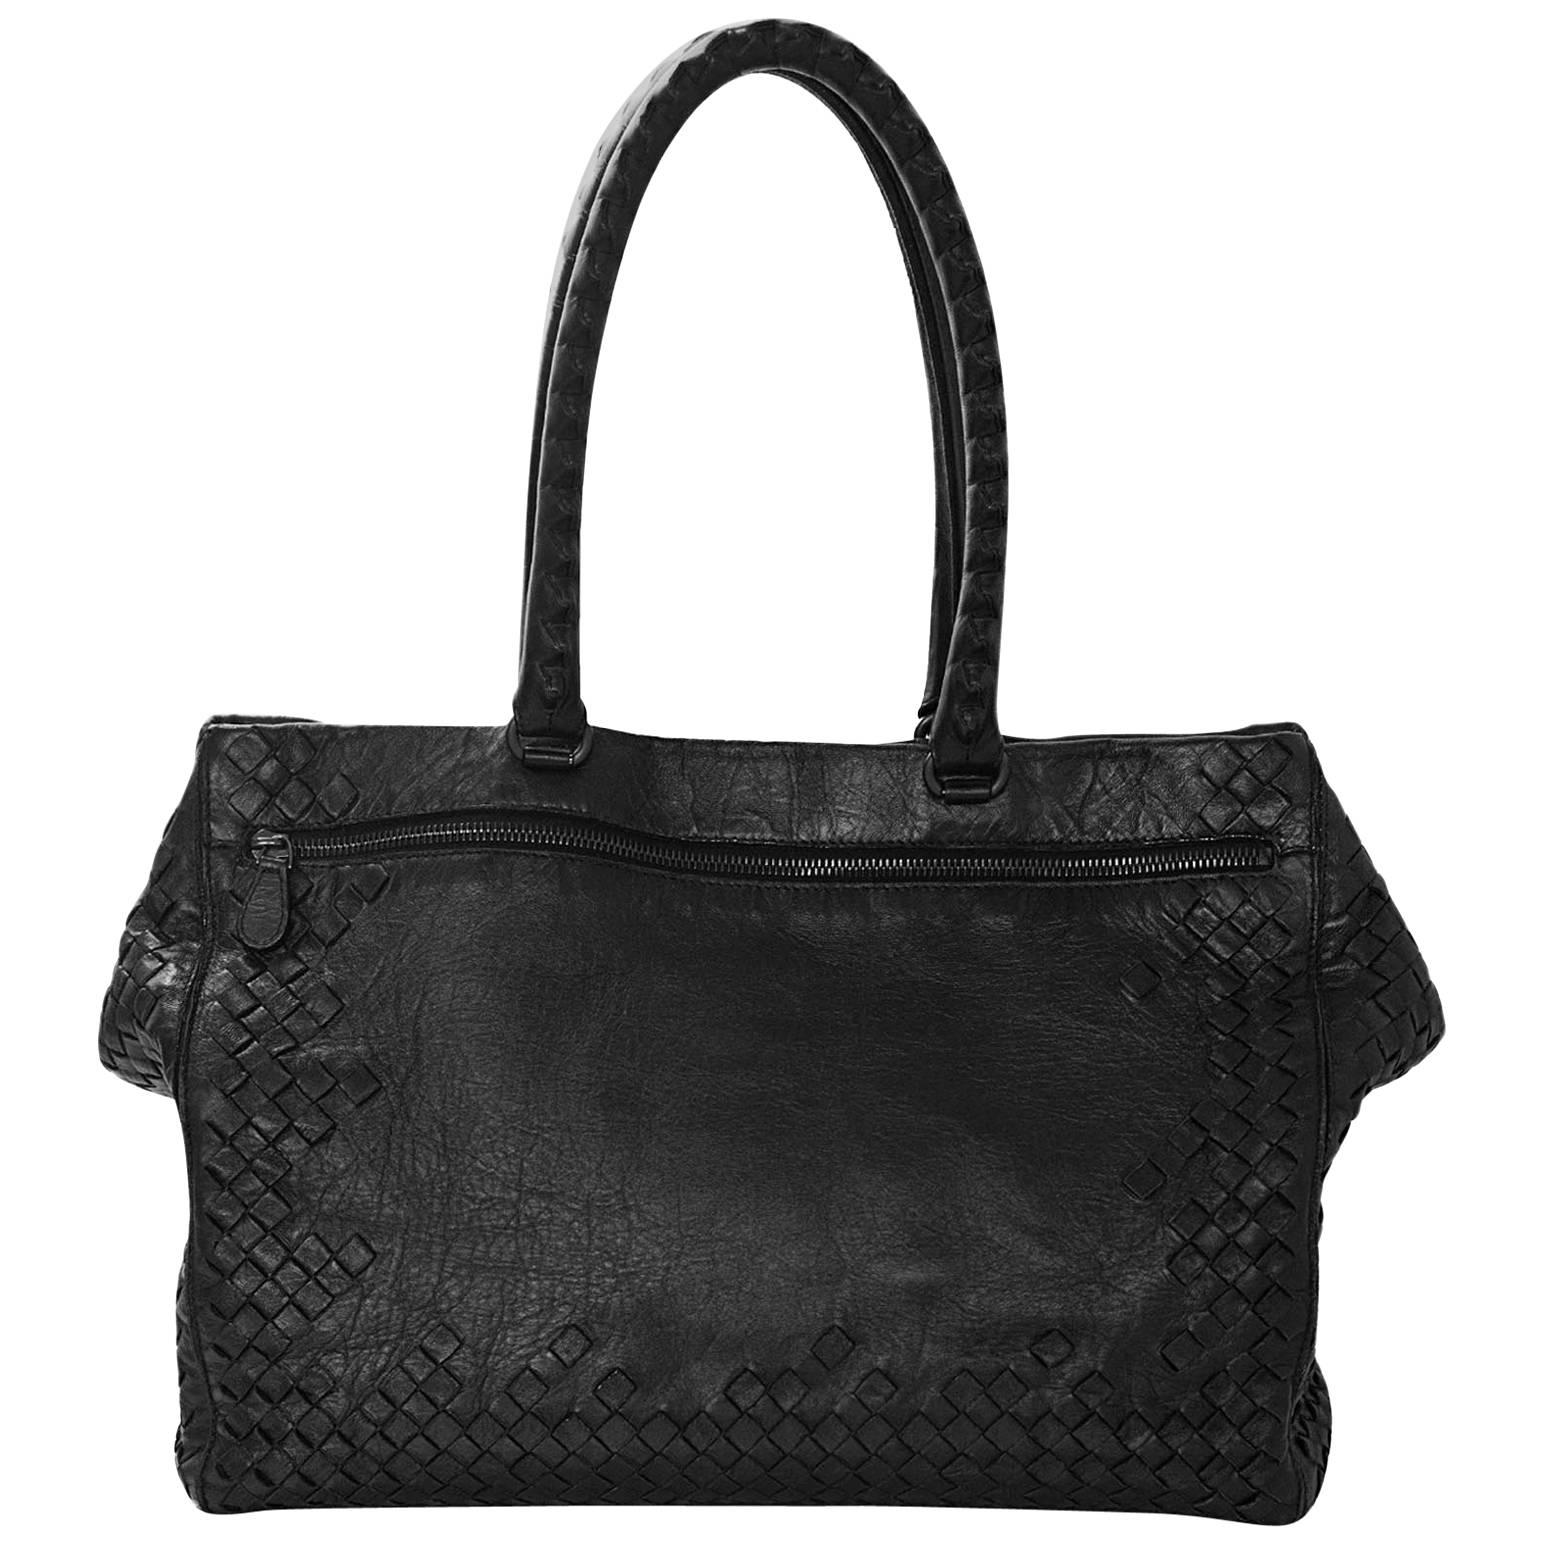 Bottega Veneta Black Woven Intrecciato and Smooth Leather Tote Bag